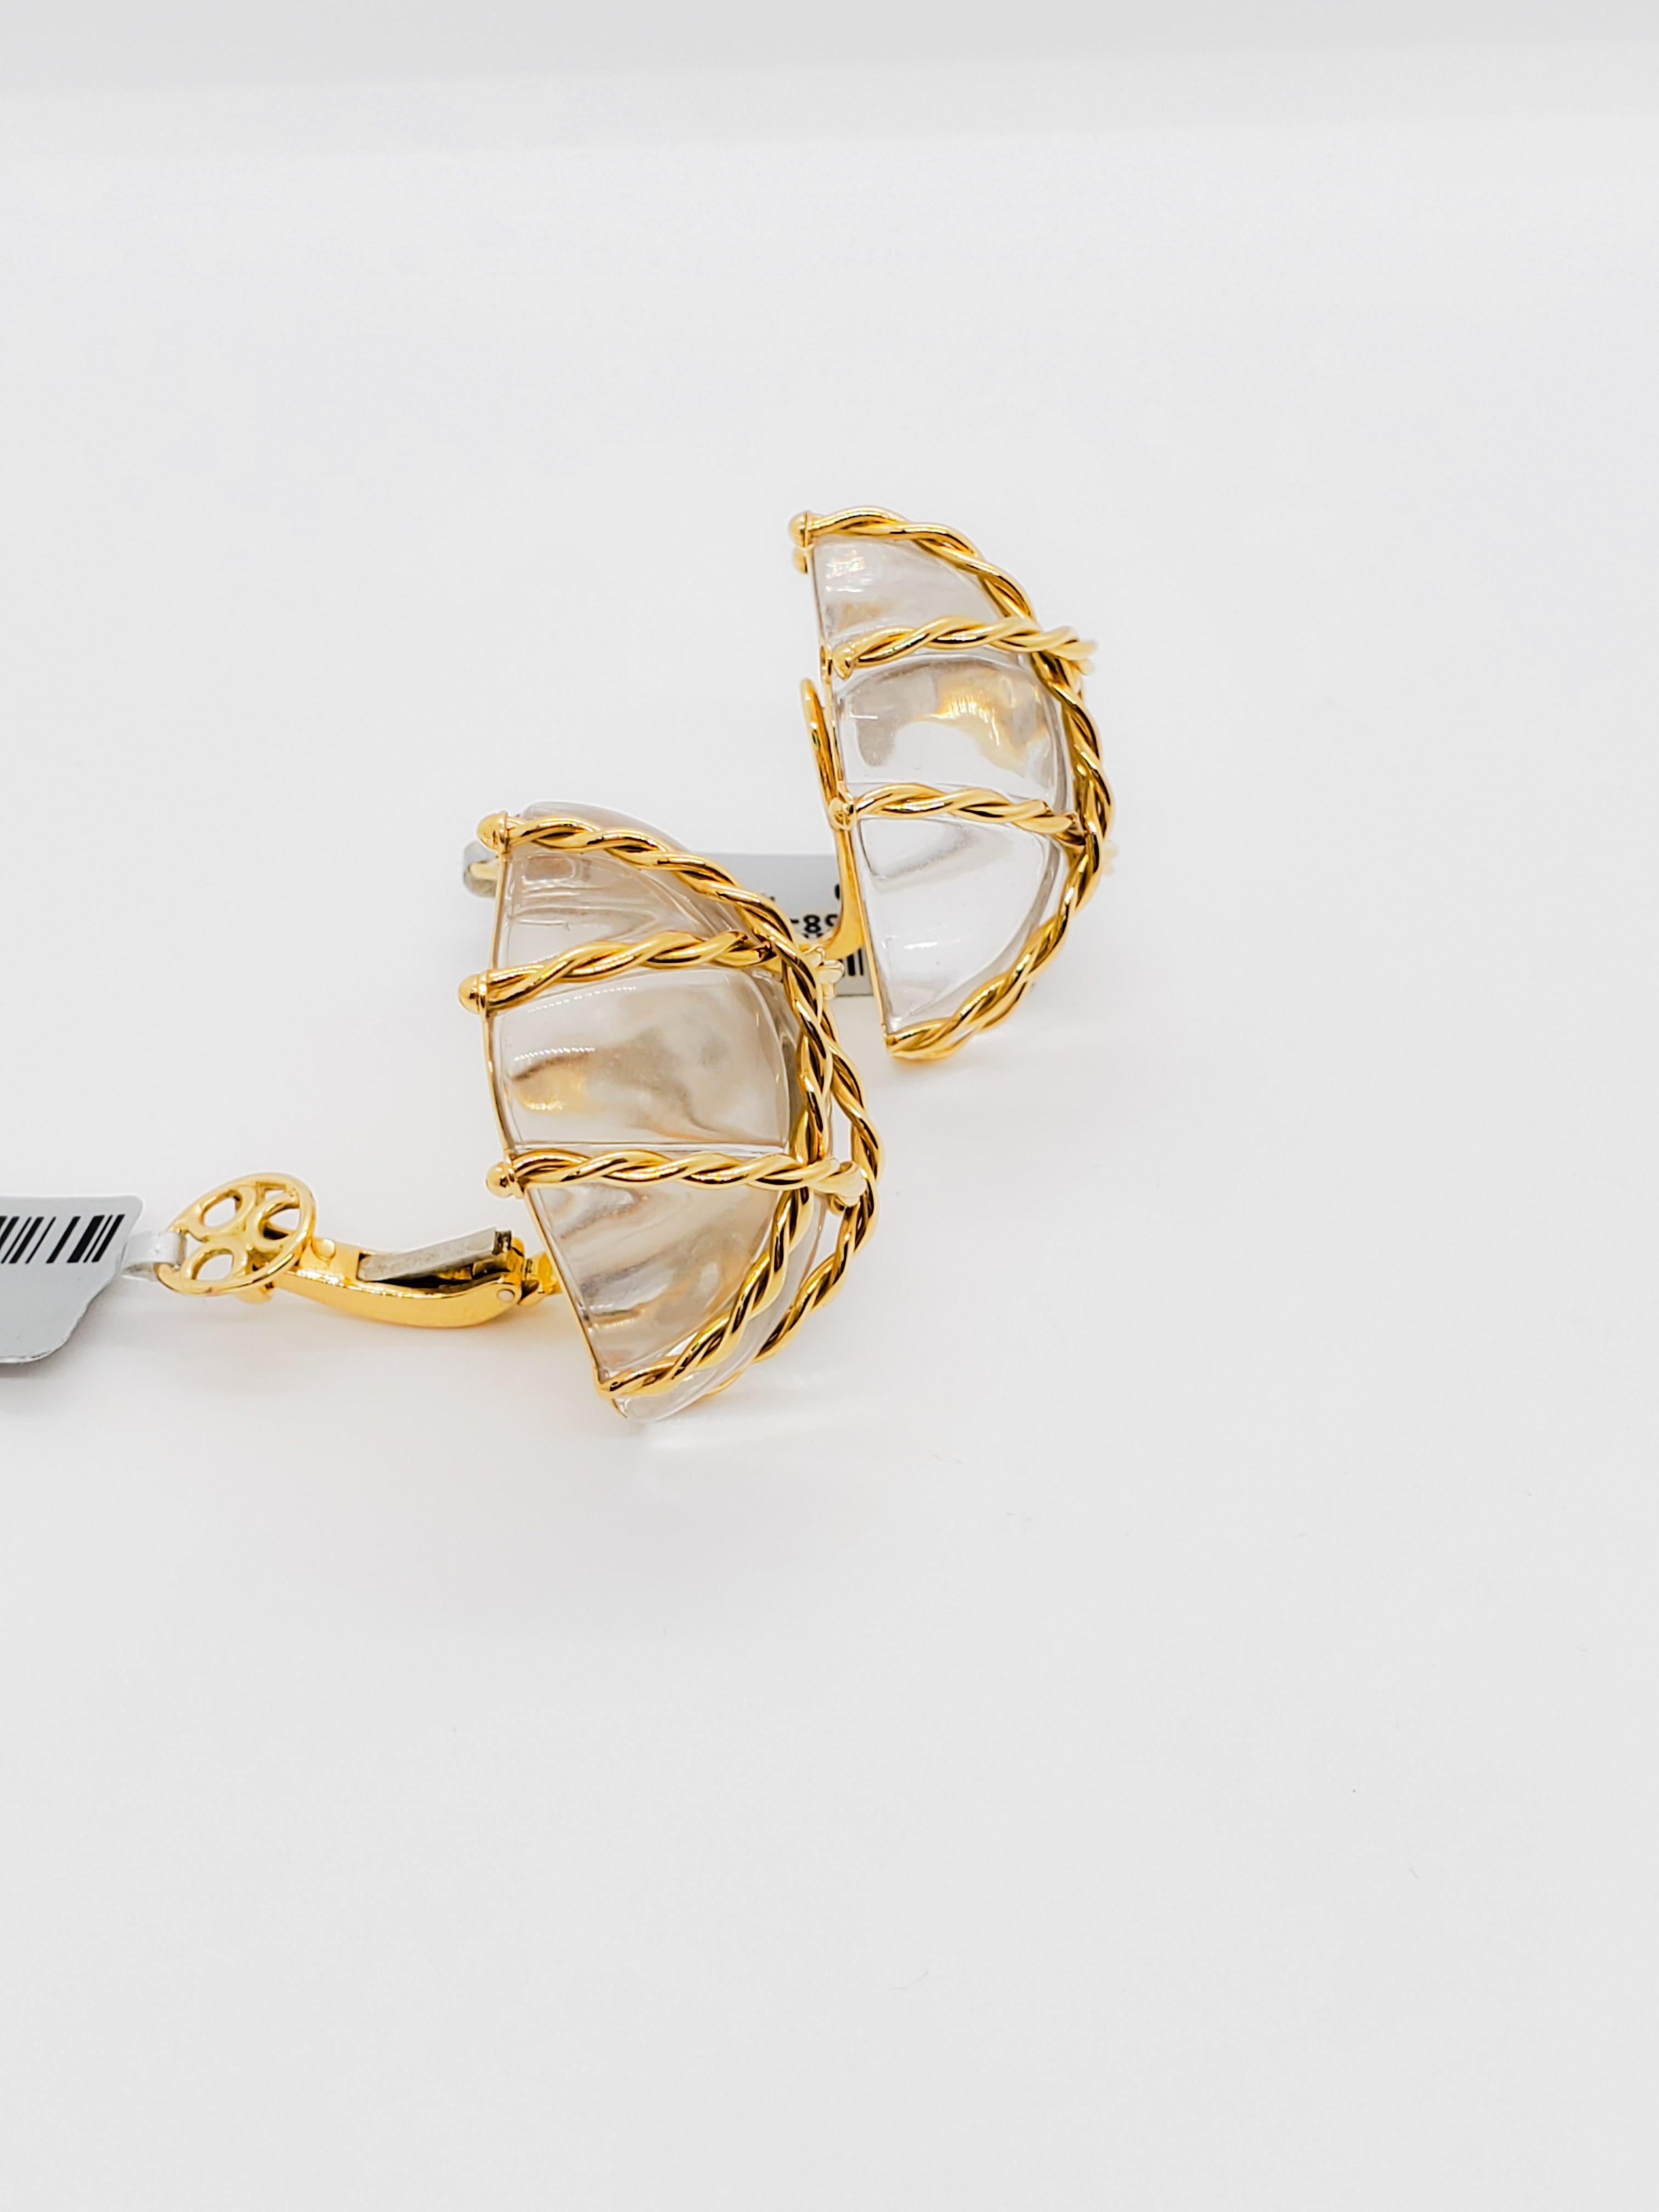 Seaman Schepps Rock Crystal Earrings in 18 Karat Yellow Gold In New Condition In Los Angeles, CA